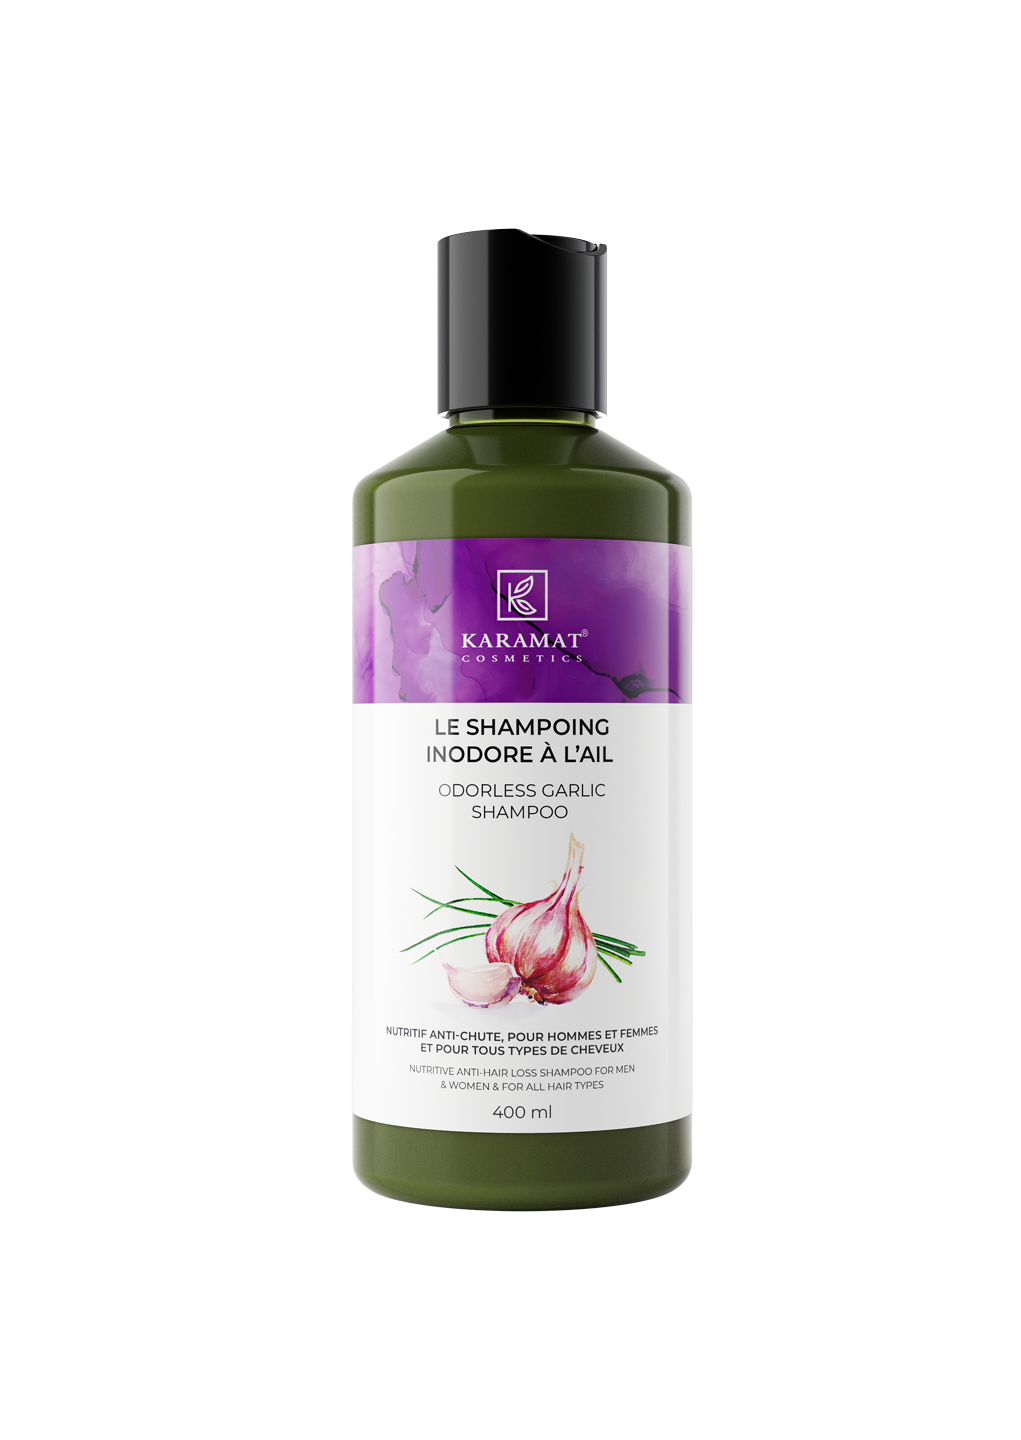 Odorless garlic shampoo 400 ML - Karamat Cosmetics